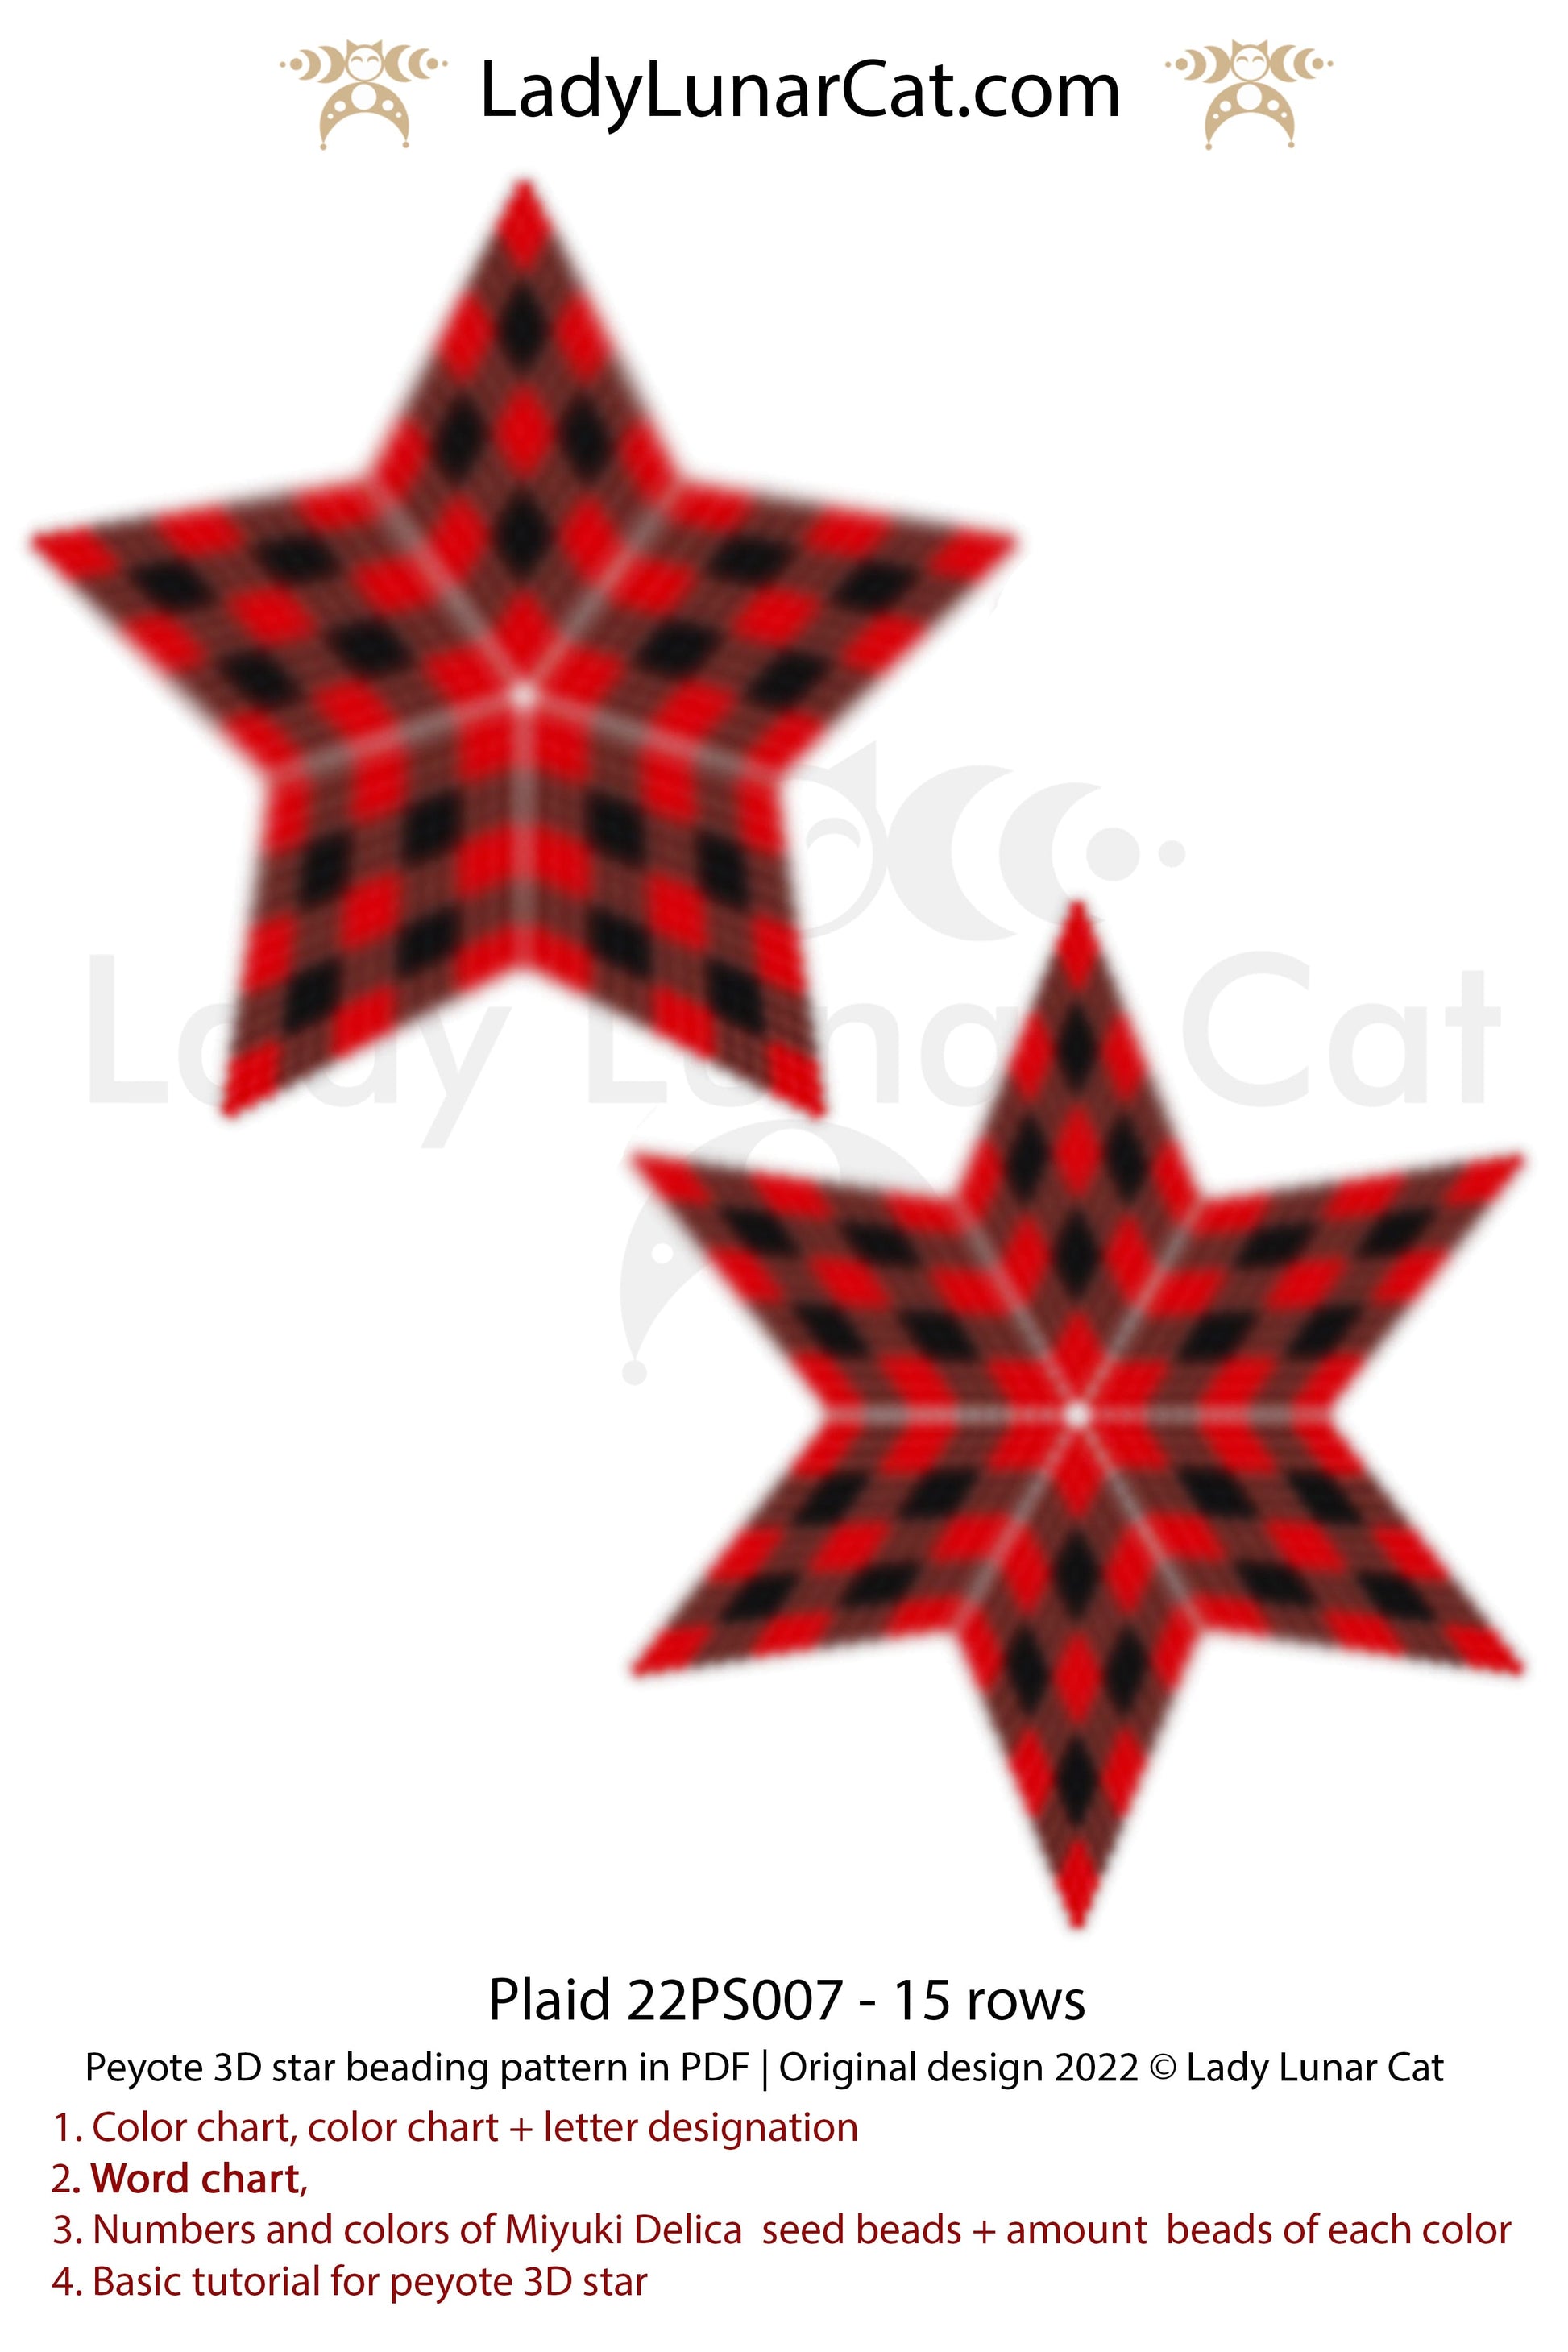 Peyote star pattern for beading - Plaid 22PS007 15 rows LadyLunarCat